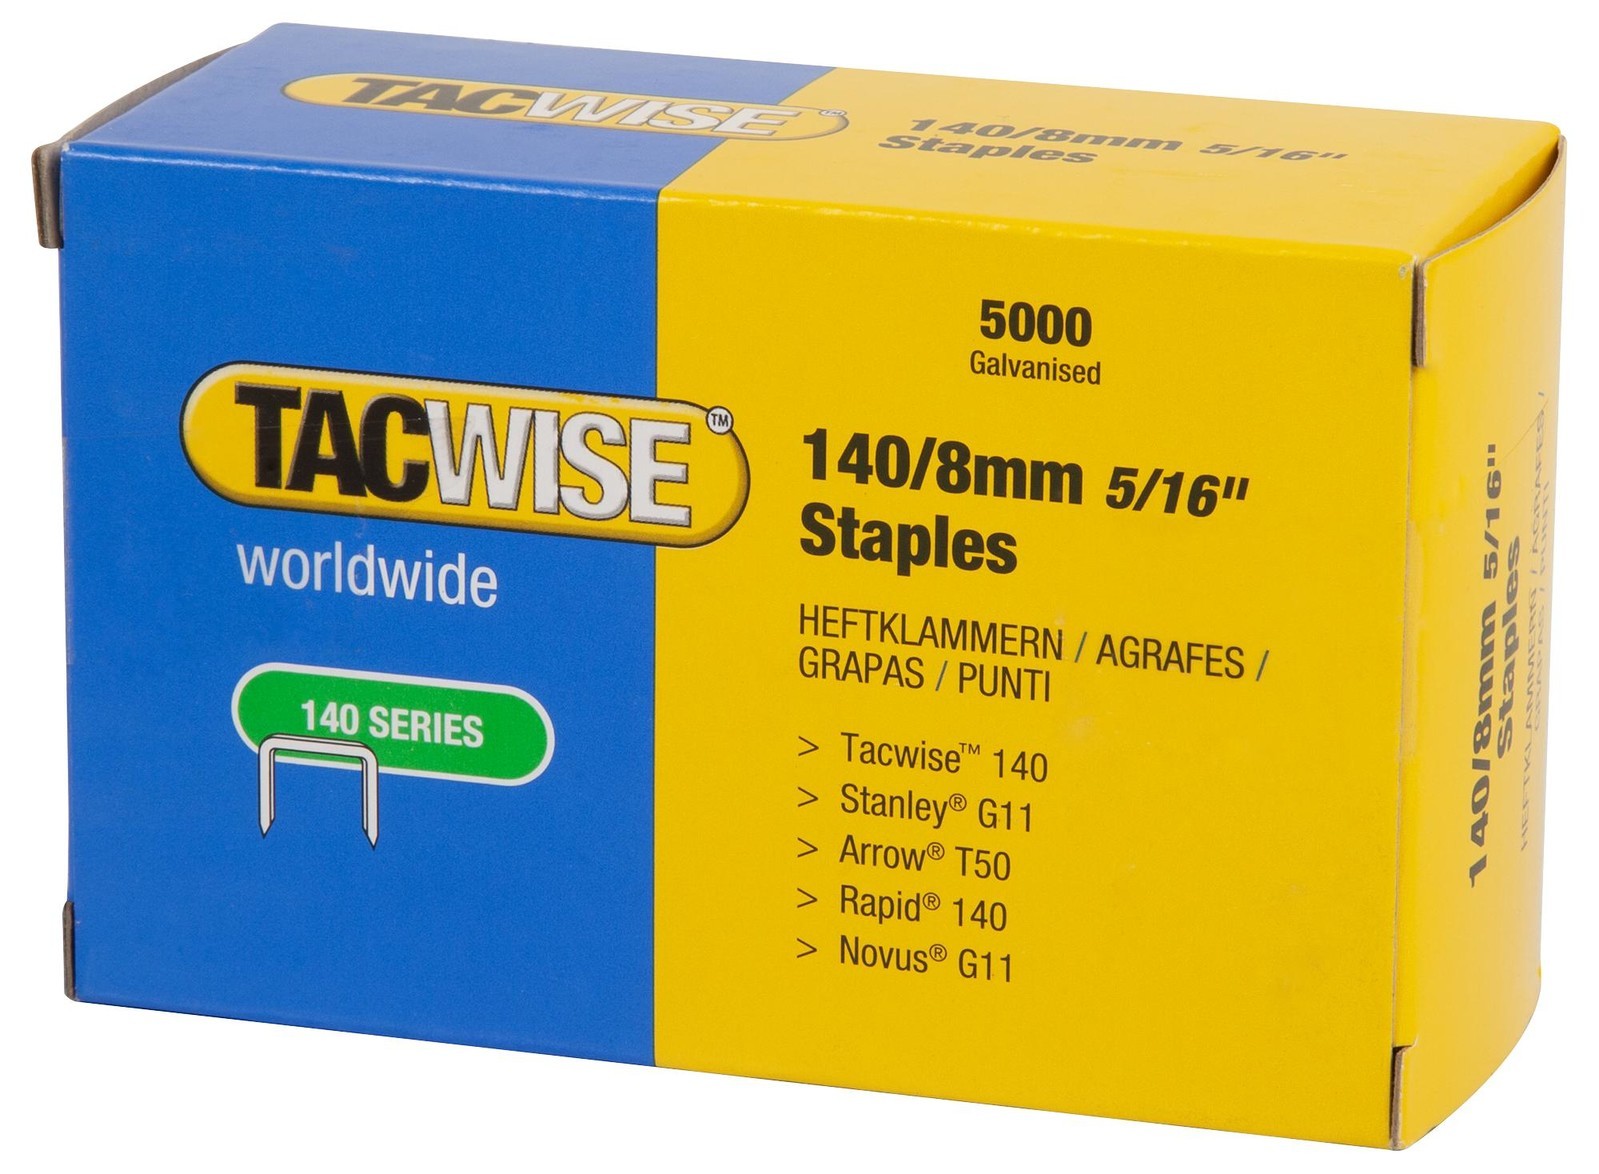 Tacwise Plc 0341 8mm Staples (5000Pk)